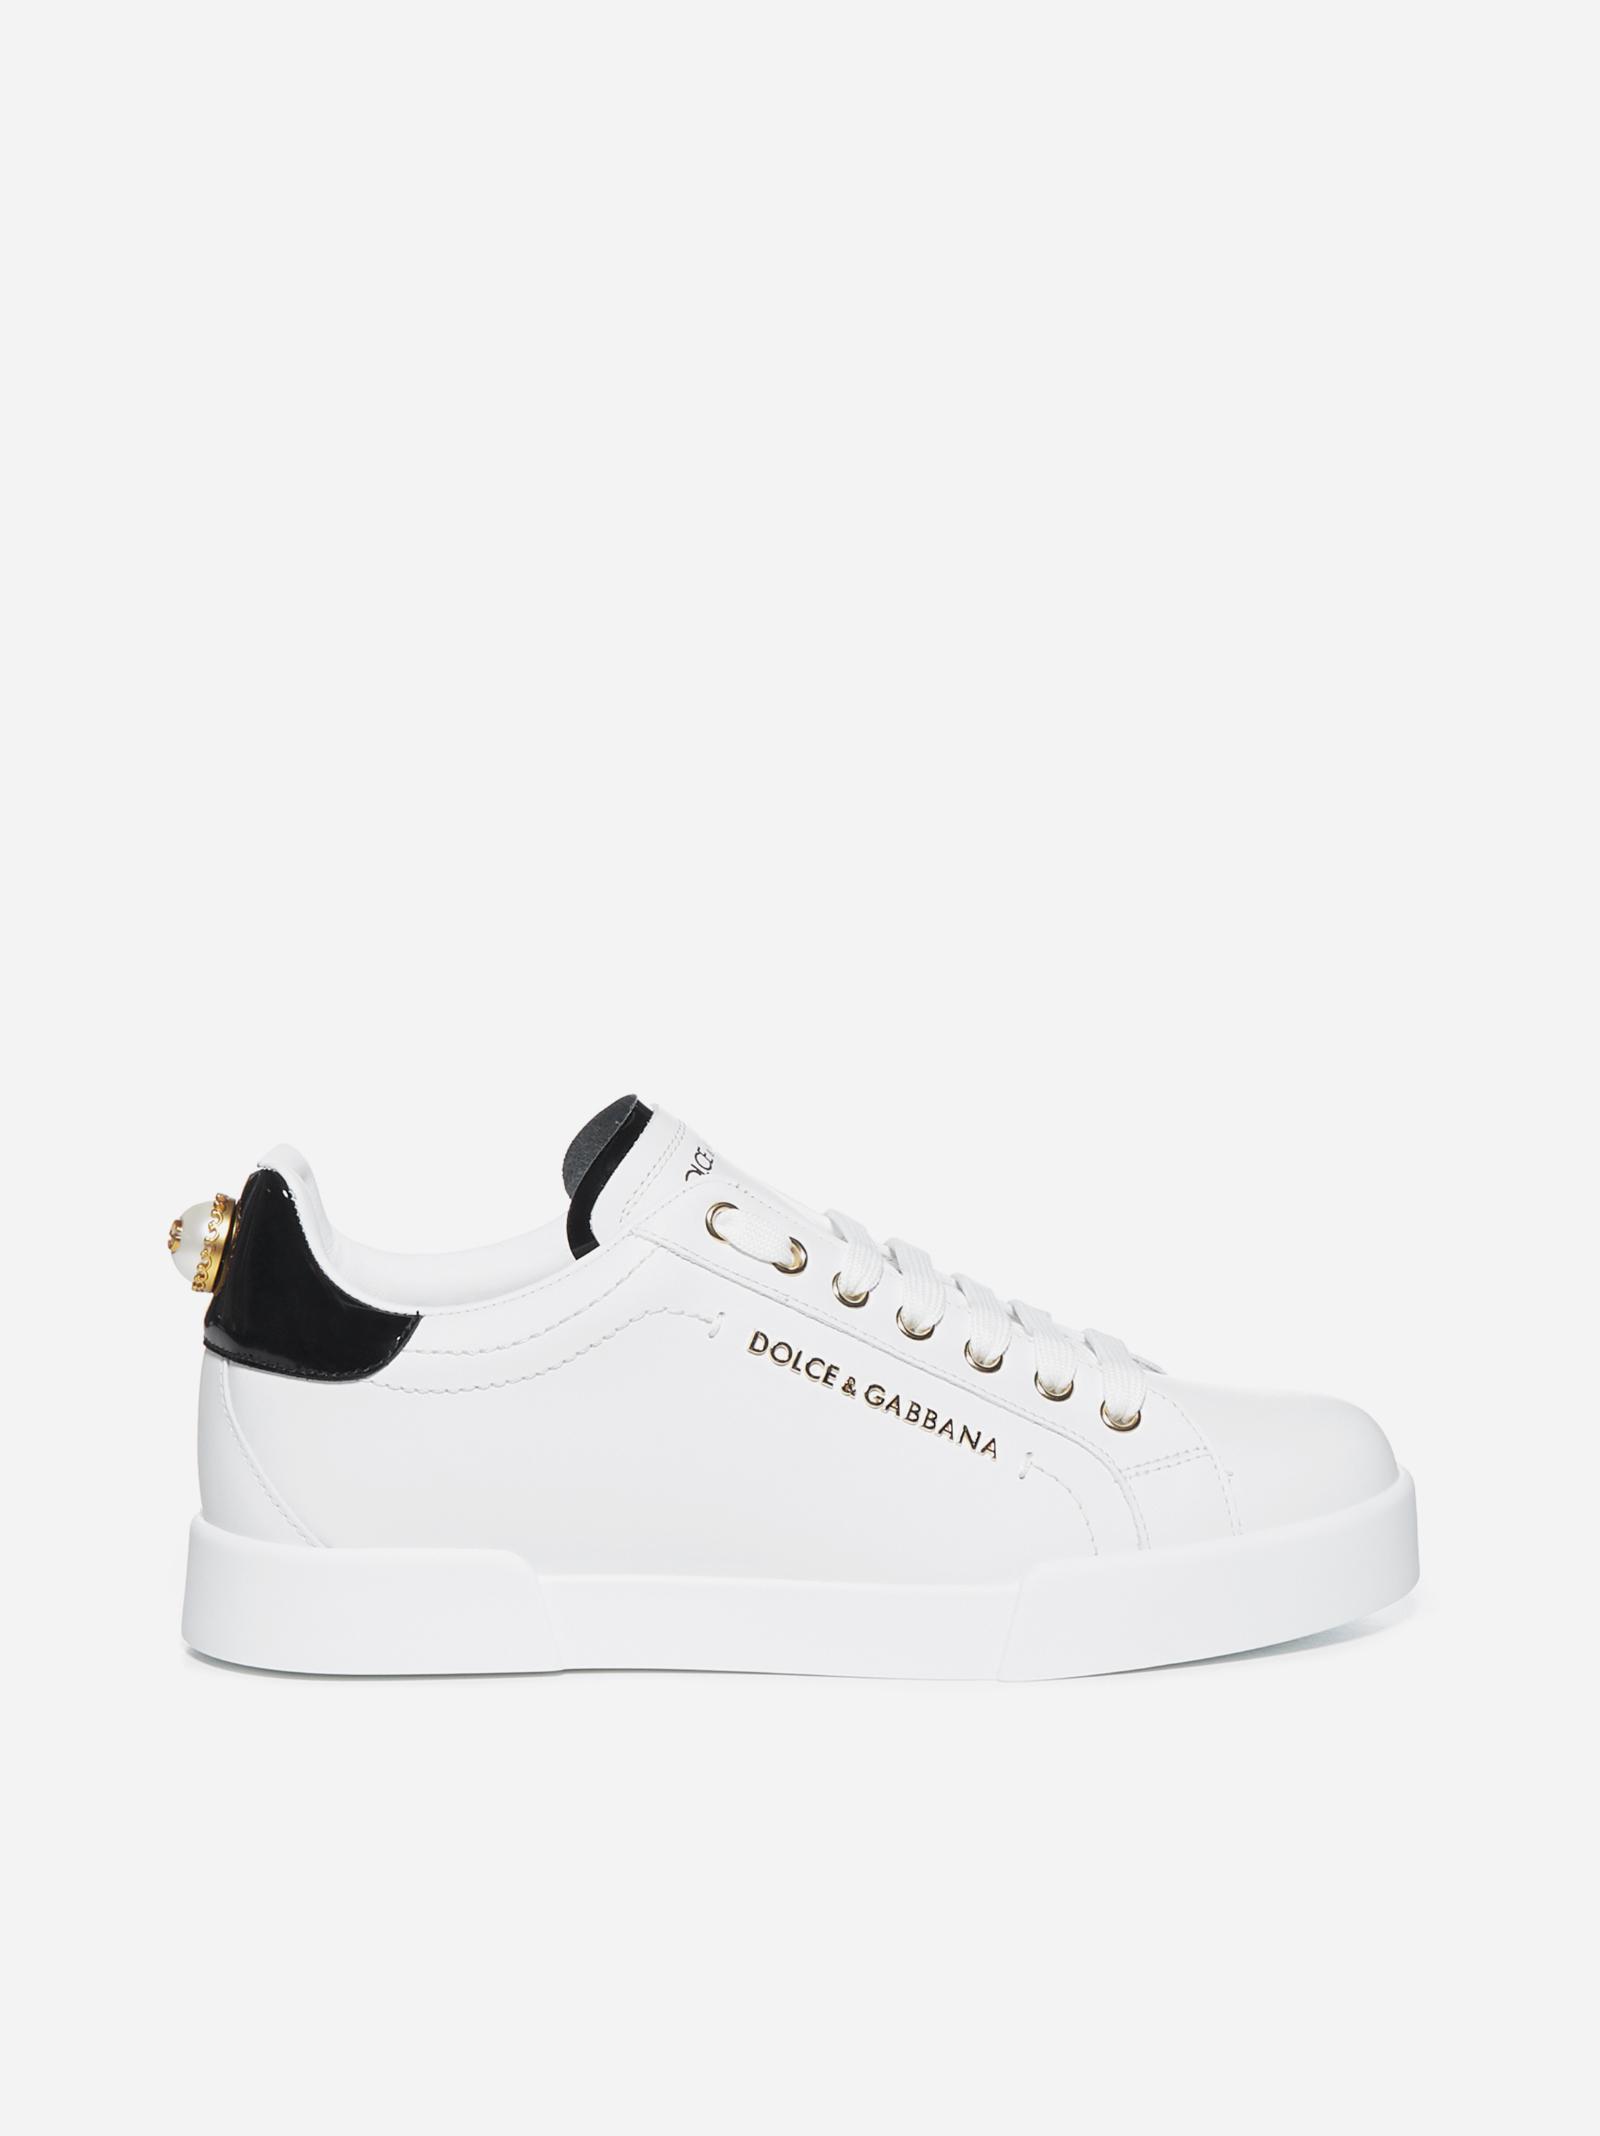 Dolce & Gabbana Portofino Logo-pearl Leather Sneakers in White - Lyst